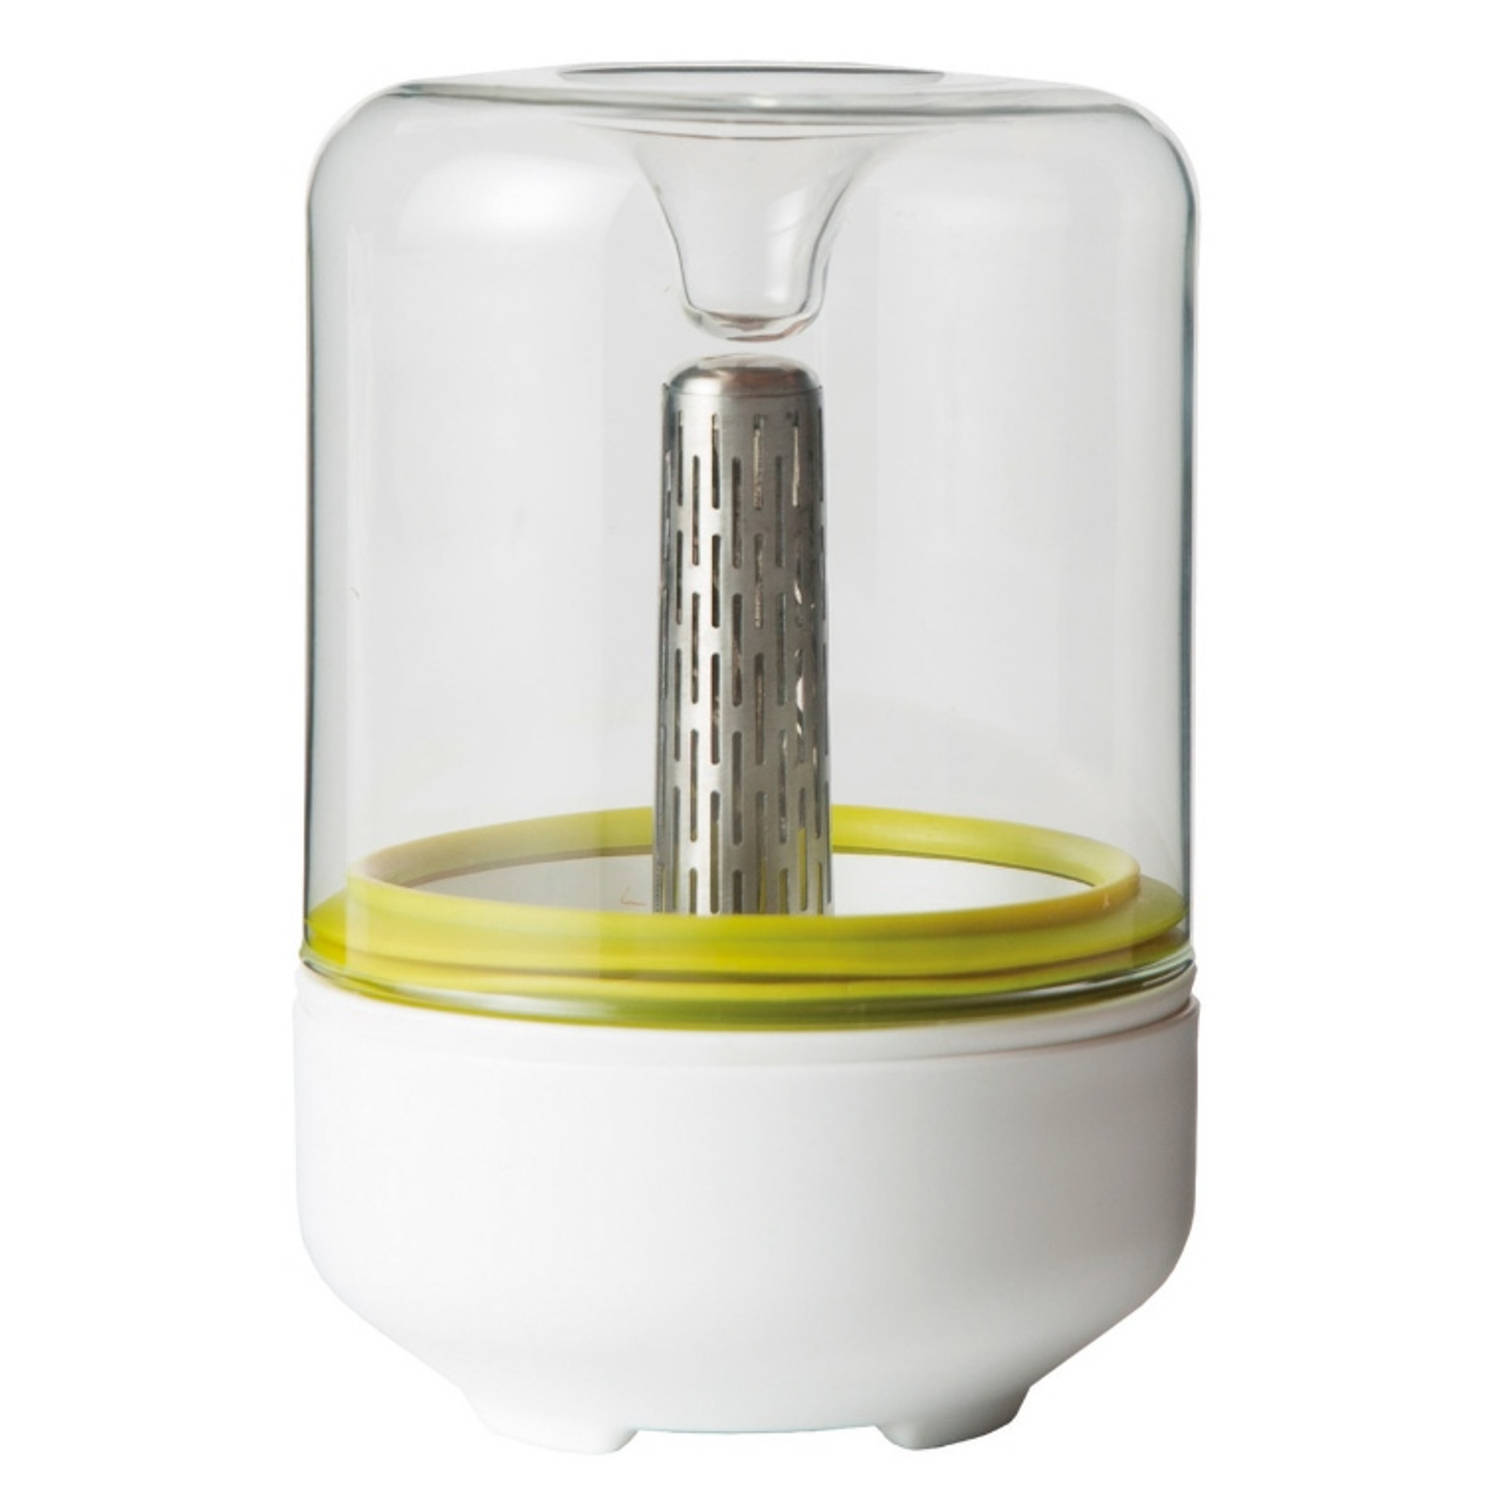 Kweekpot, Kiem Groei Kit, 10.5 x 15.5 CM, RVS, Glas, BPA Vrij, Kunststof - Chef'n | Sprouter